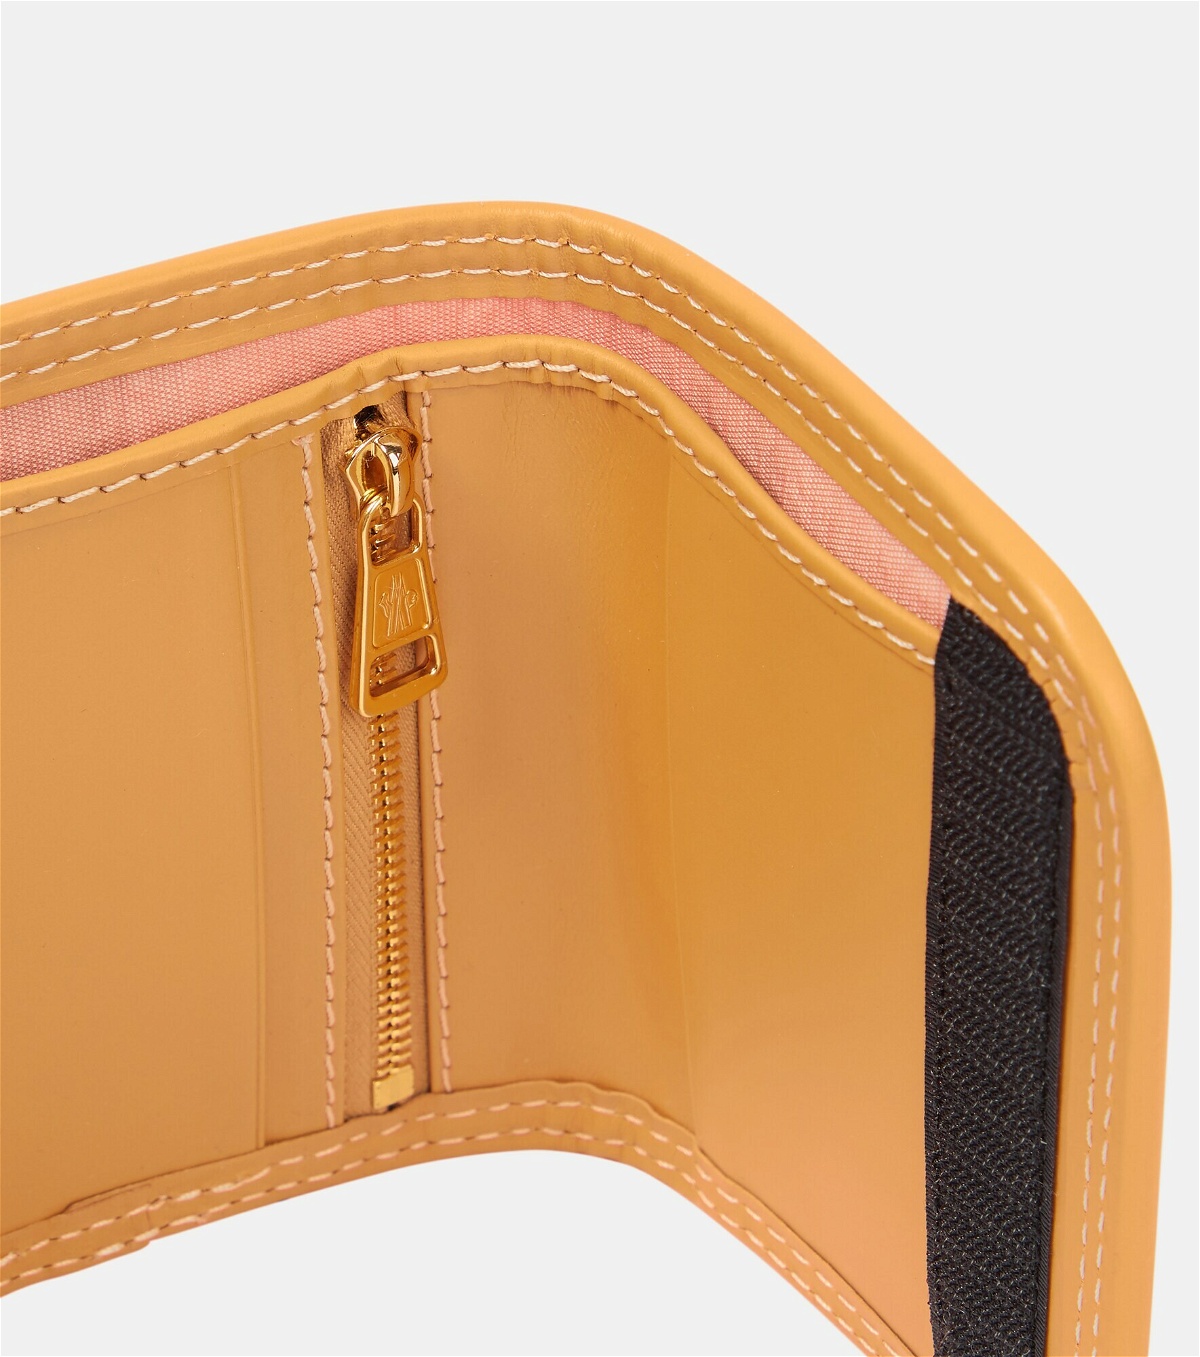 Moncler Genius - 1 Moncler JW Anderson logo leather-trimmed wallet ...